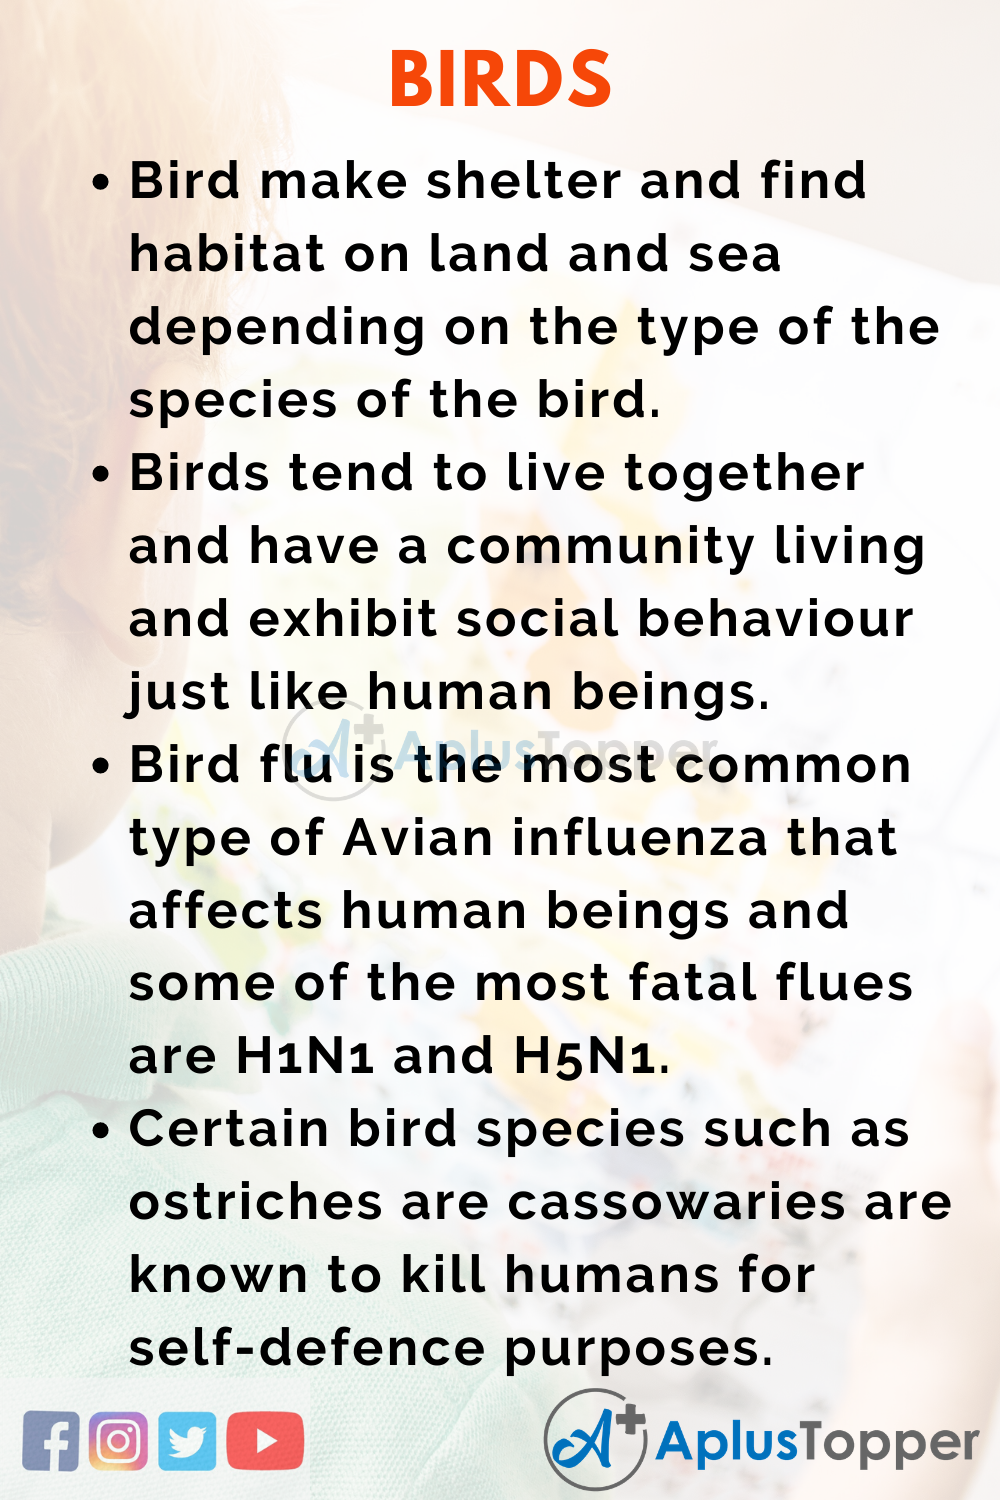 essay on birds